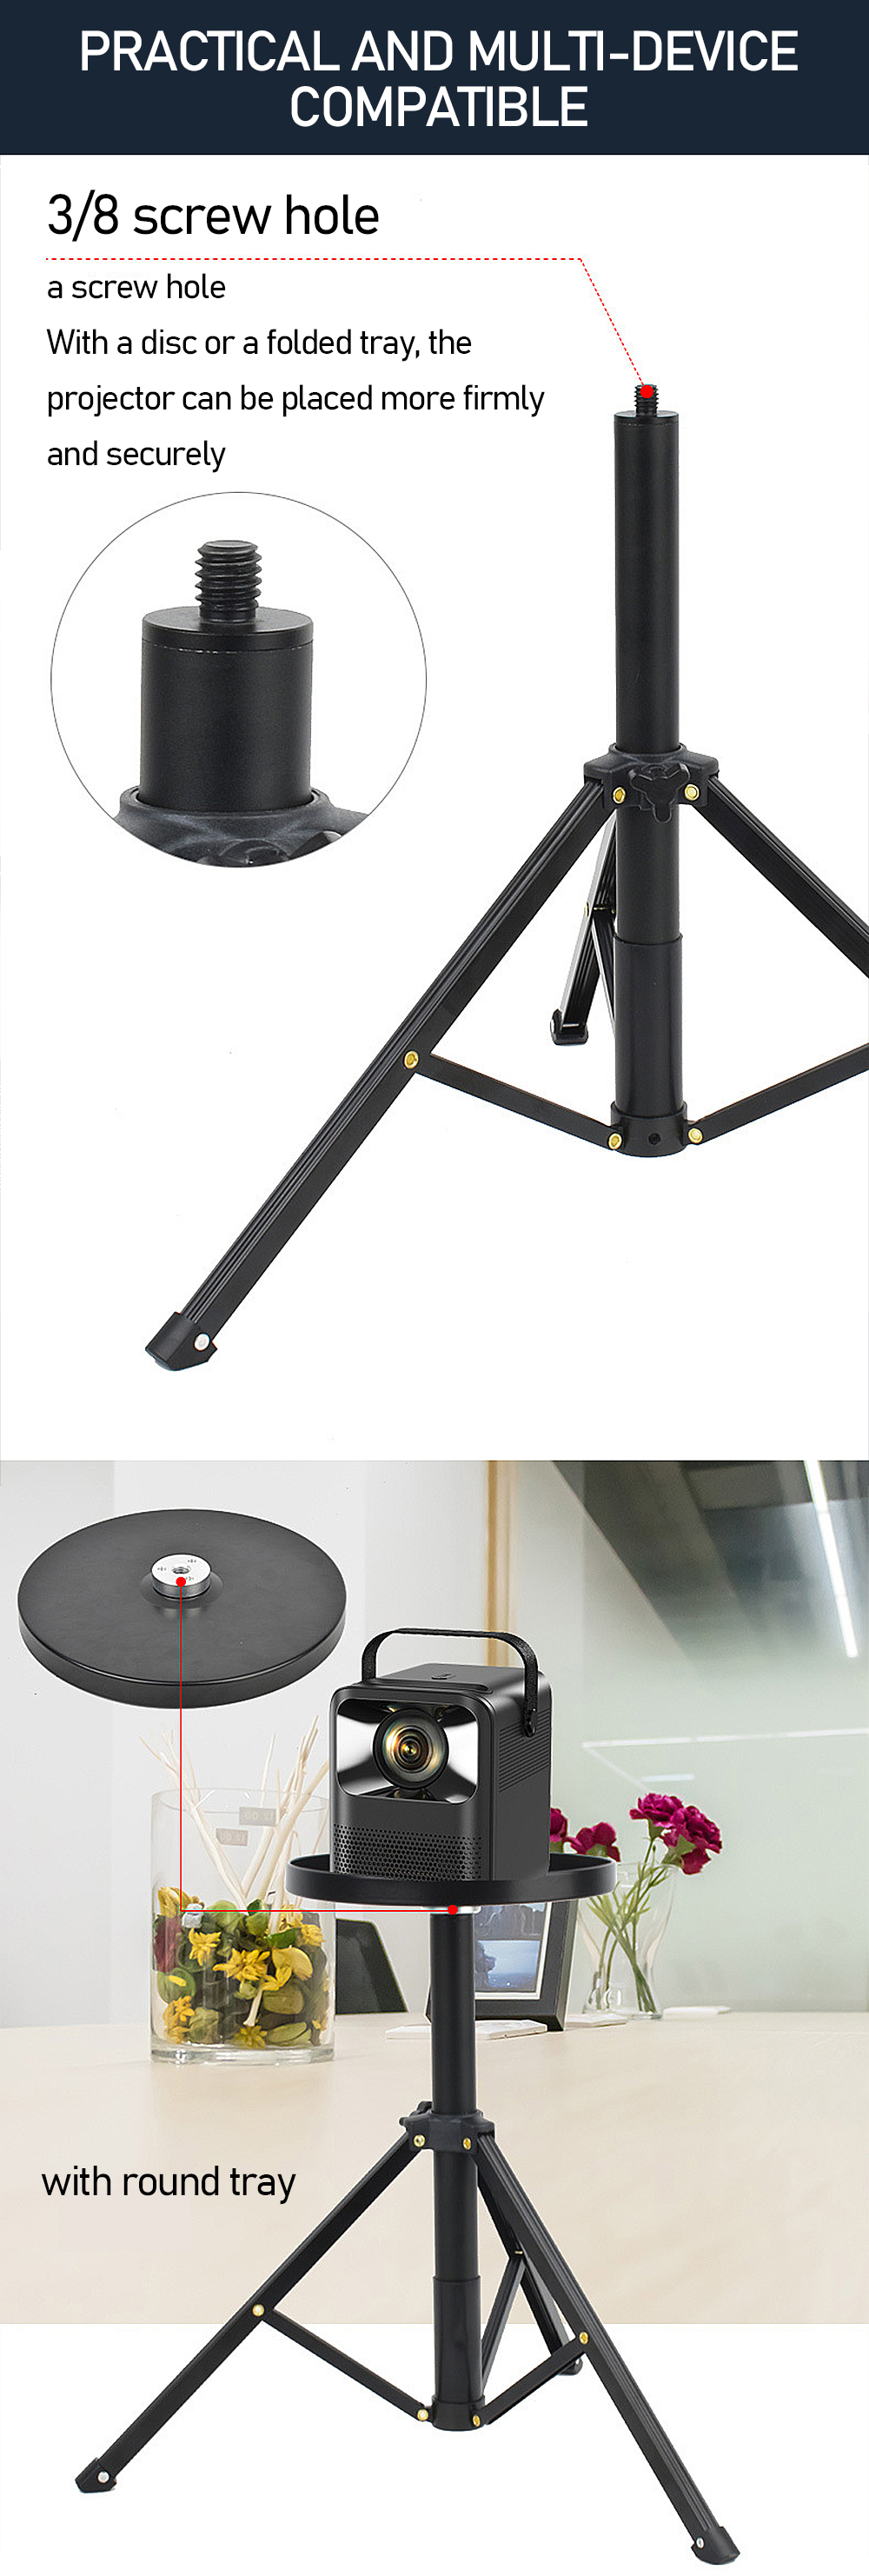 NAMEIKE-Portable-Metal-Projector-Adjustable-Desktop-Tripod-Stand-with-Round-Tray-Non-slip-Feet-Brack-1971731-3